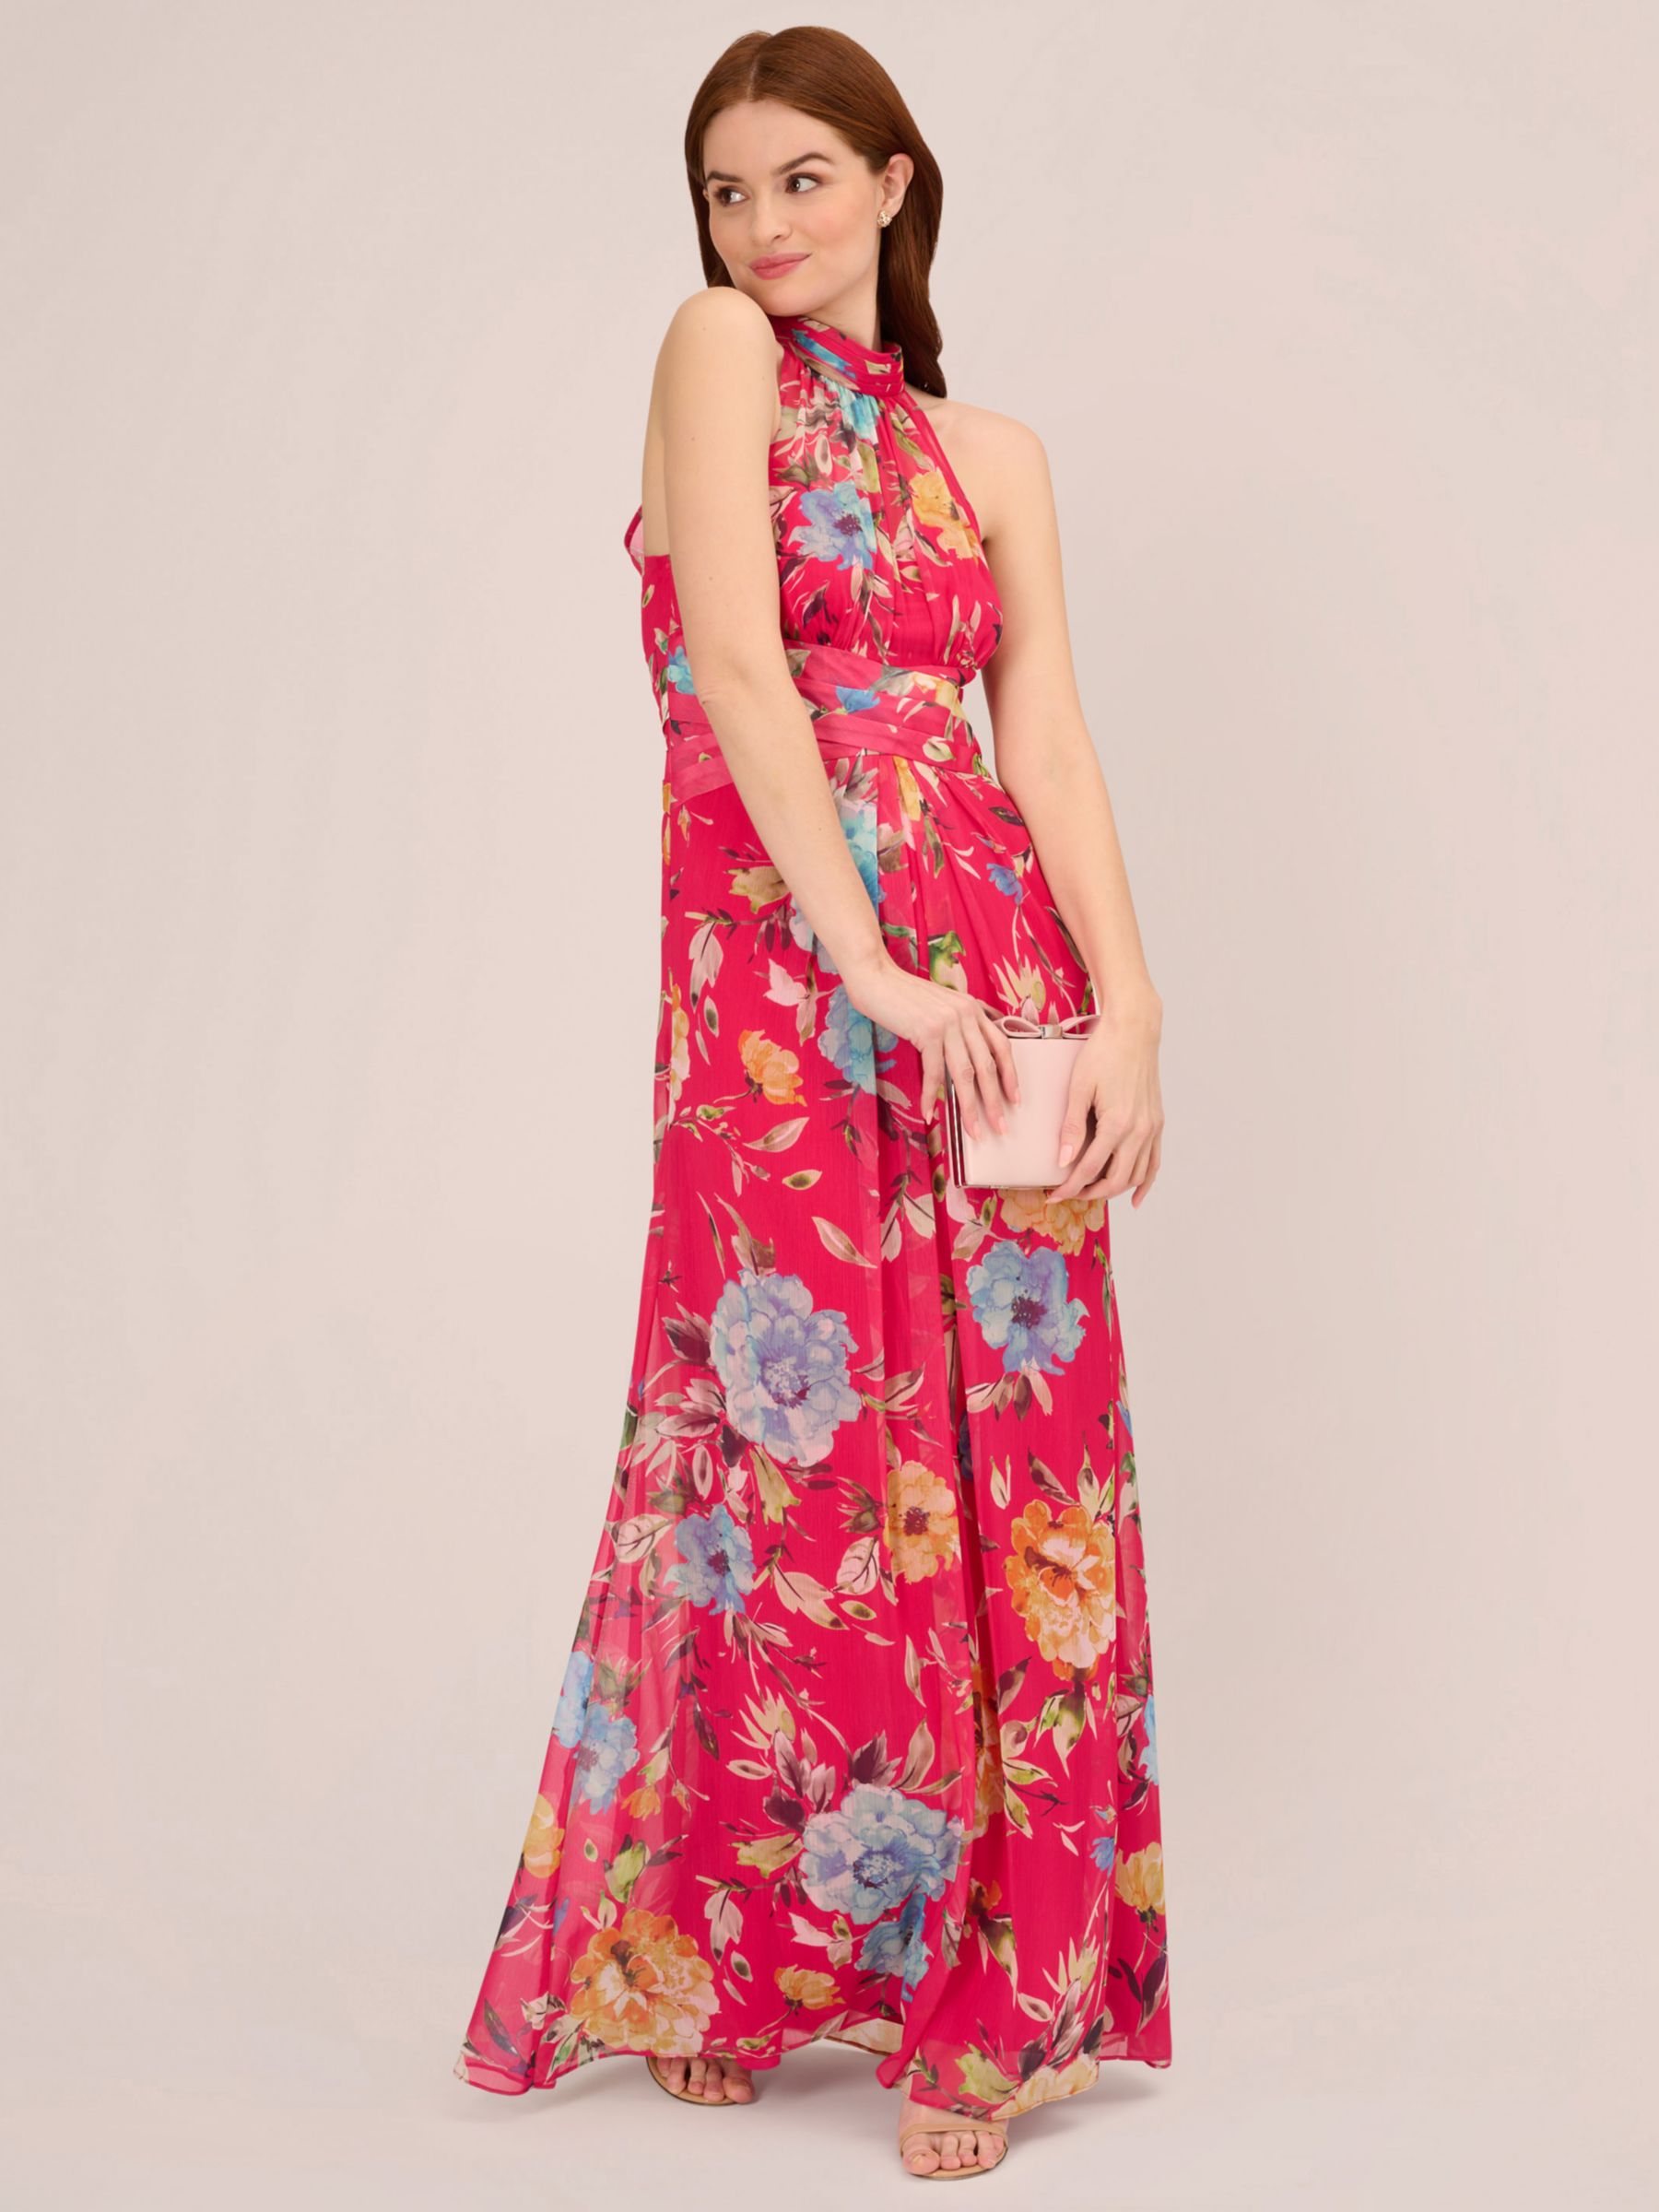 Adrianna Papell Floral Chiffon Halterneck Dress, Pink/Multi, 8